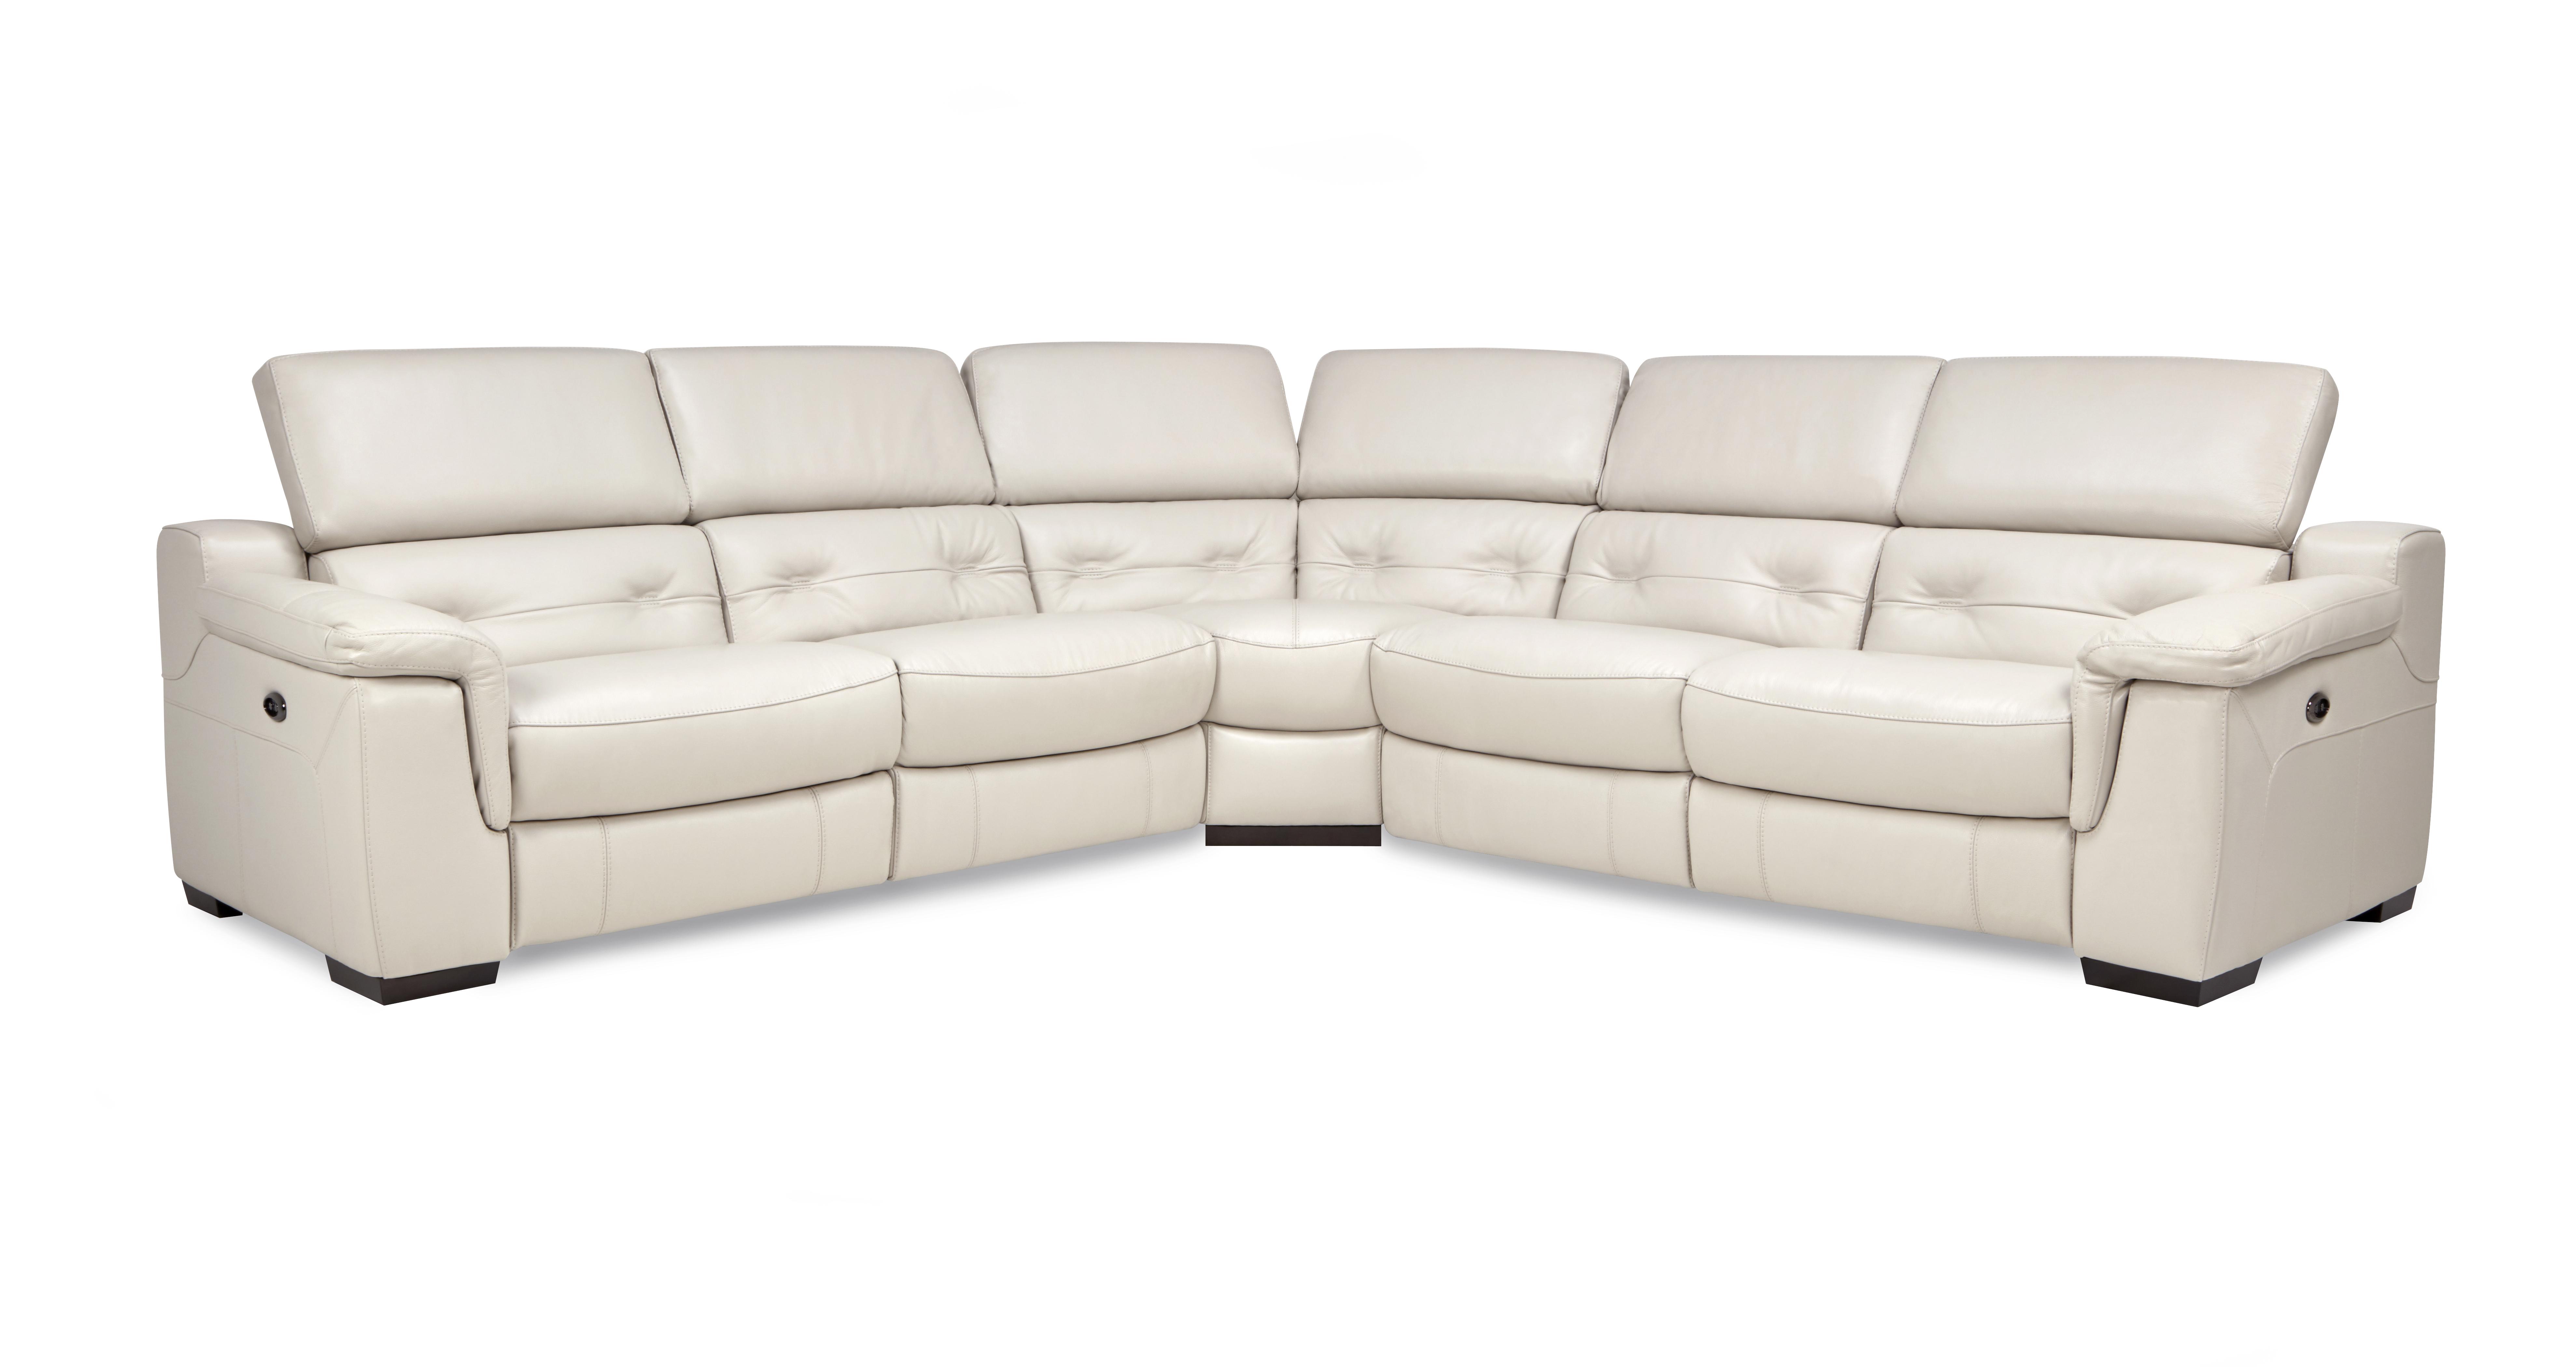 torino leather sofa reviews